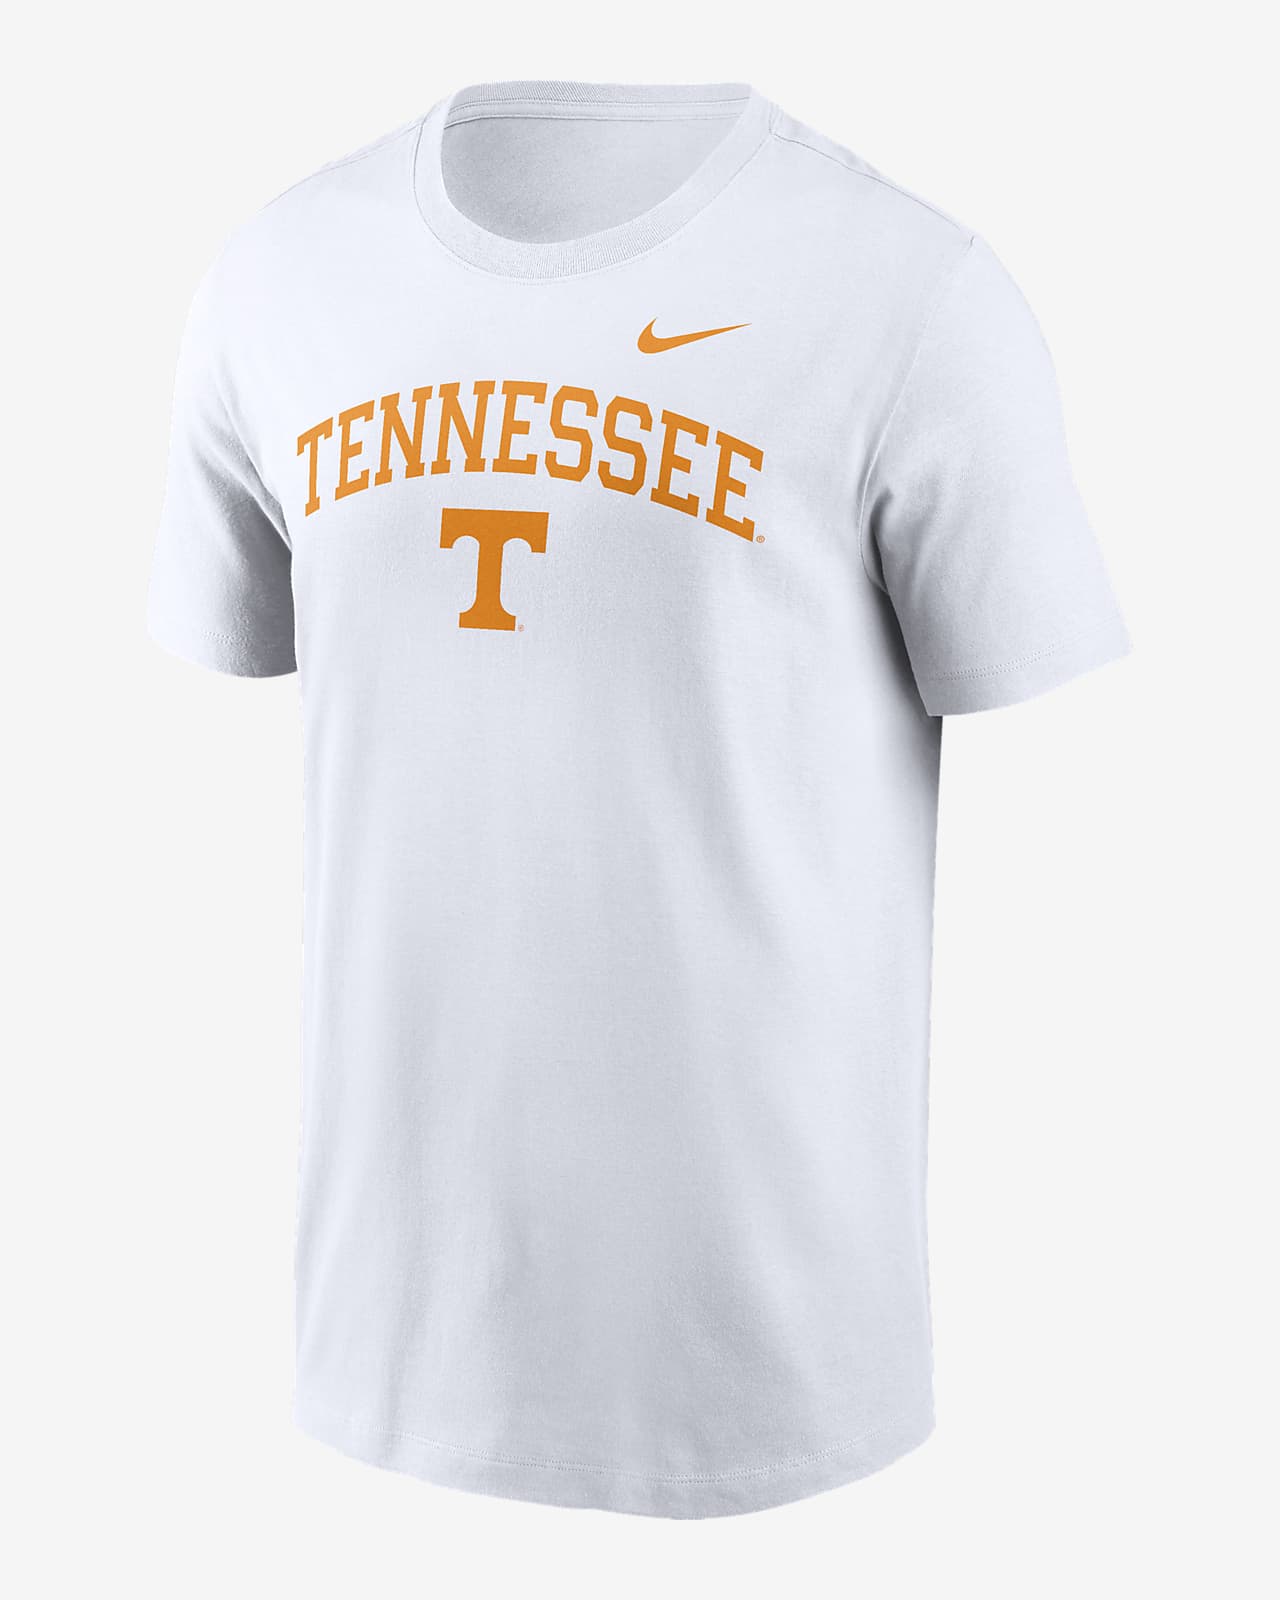 Playera universitaria Nike para hombre Tennessee Volunteers Blitz